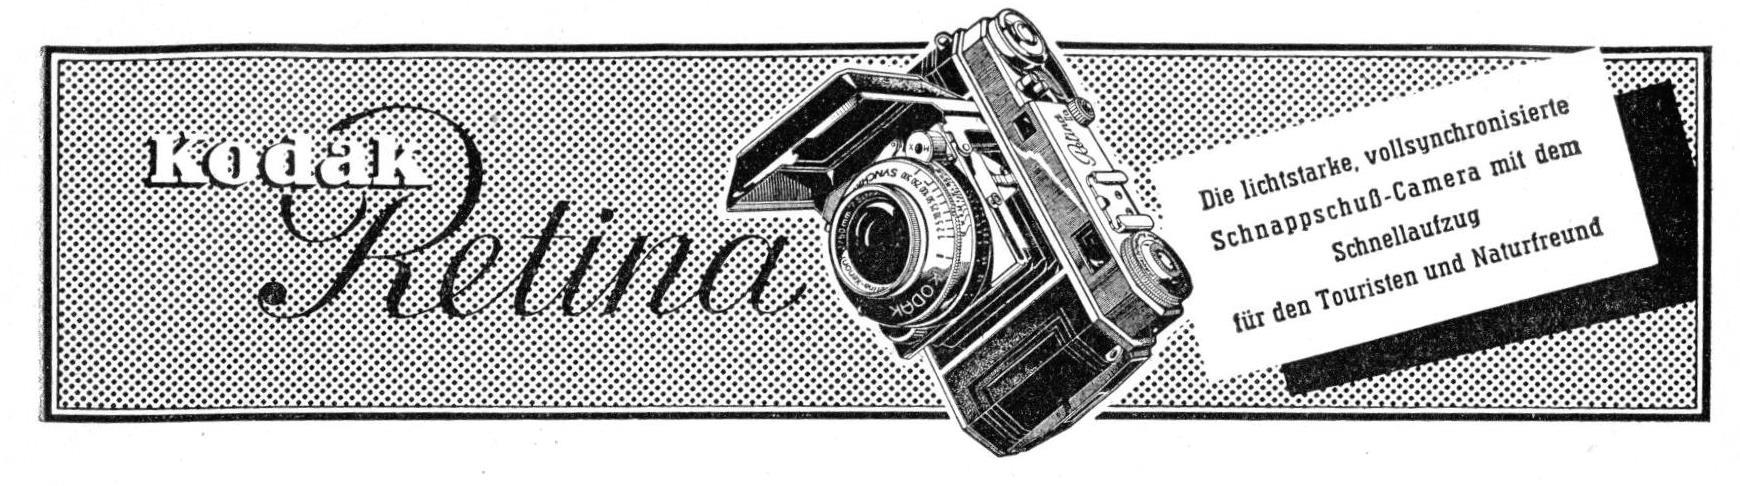 Kodak 1953 0.jpg